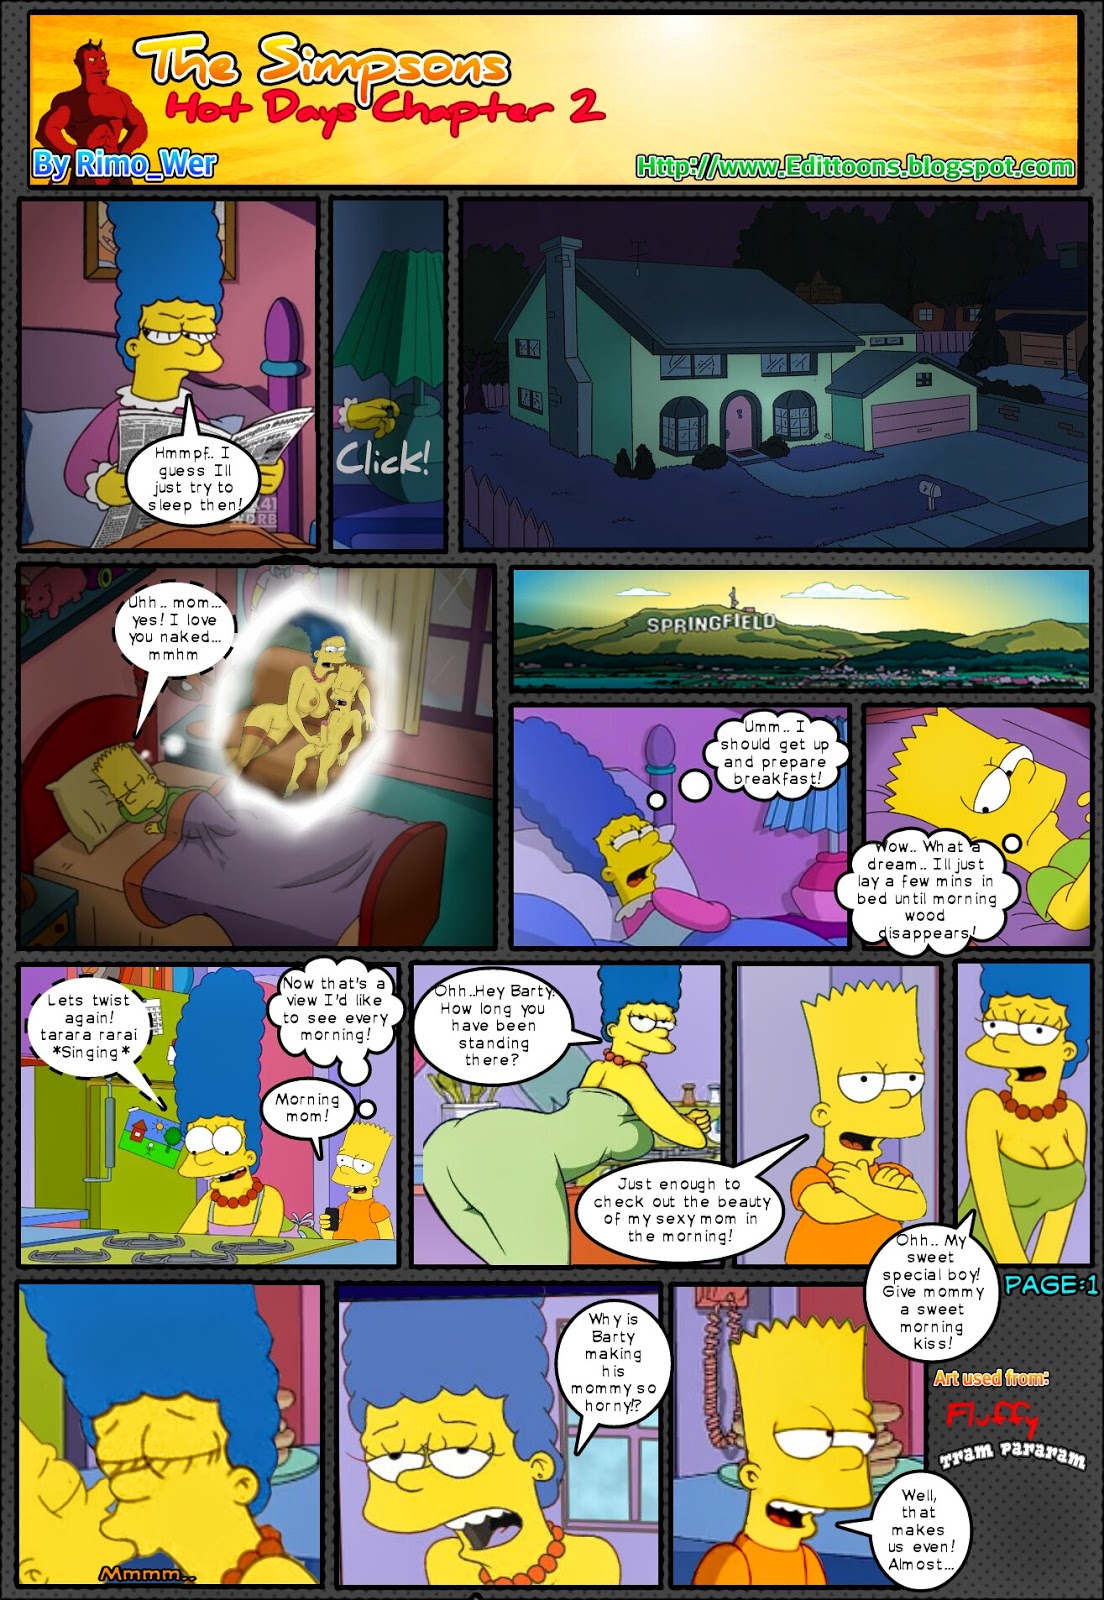 Dirty Cartoon Simpsons Porn Comic - edittoons adult cartoon comics rimo wer the simpsons hot days - XXXPicz